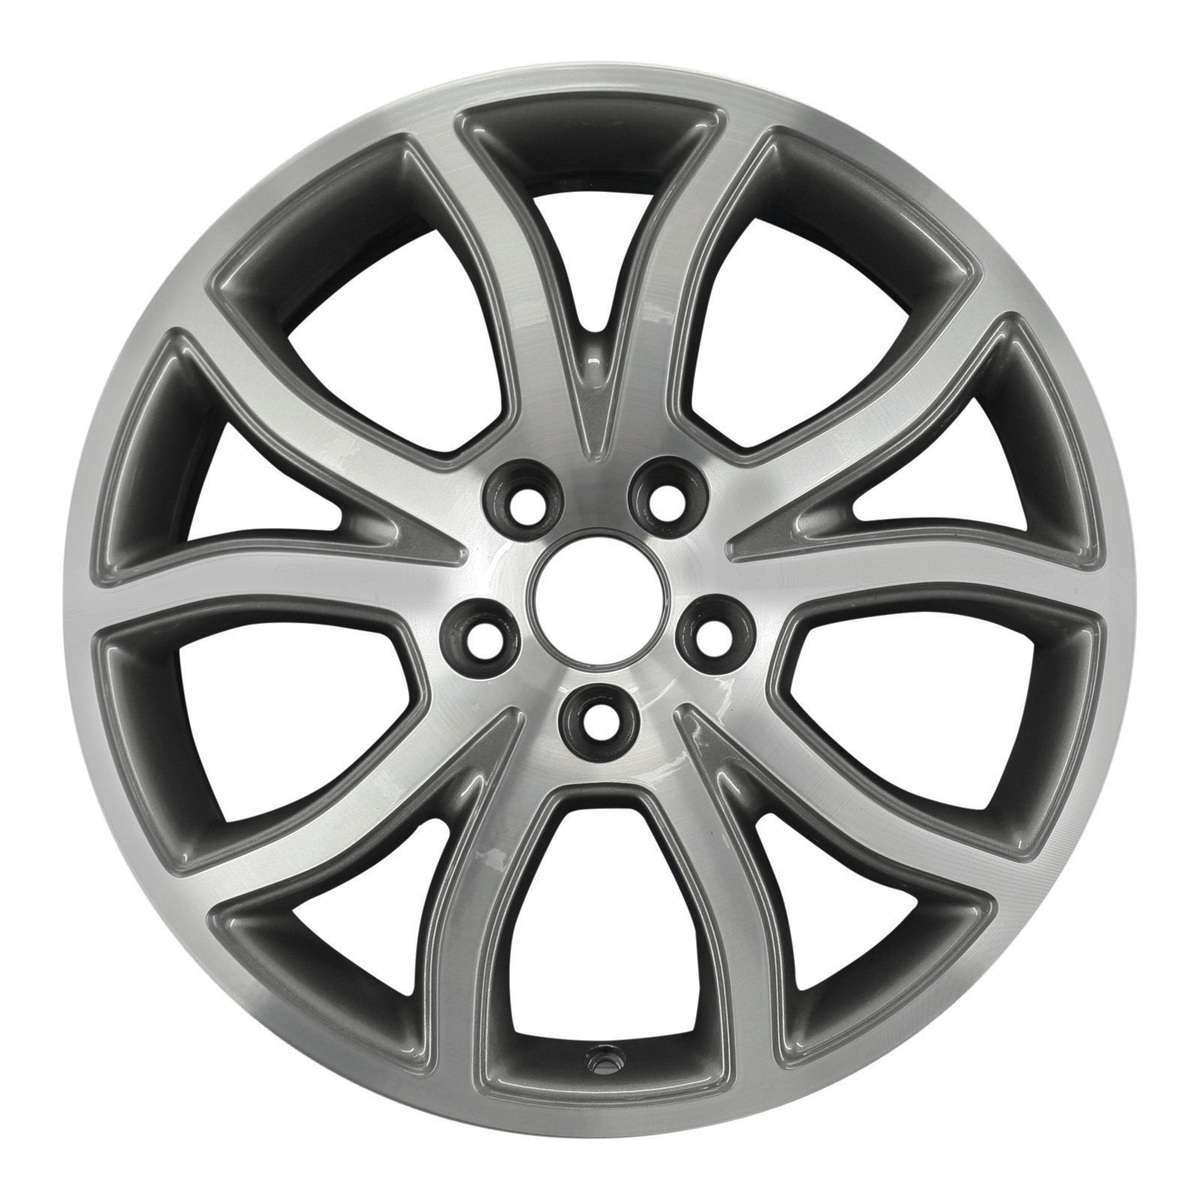 2012 Ford Fusion 18" OEM Wheel Rim W3801MC